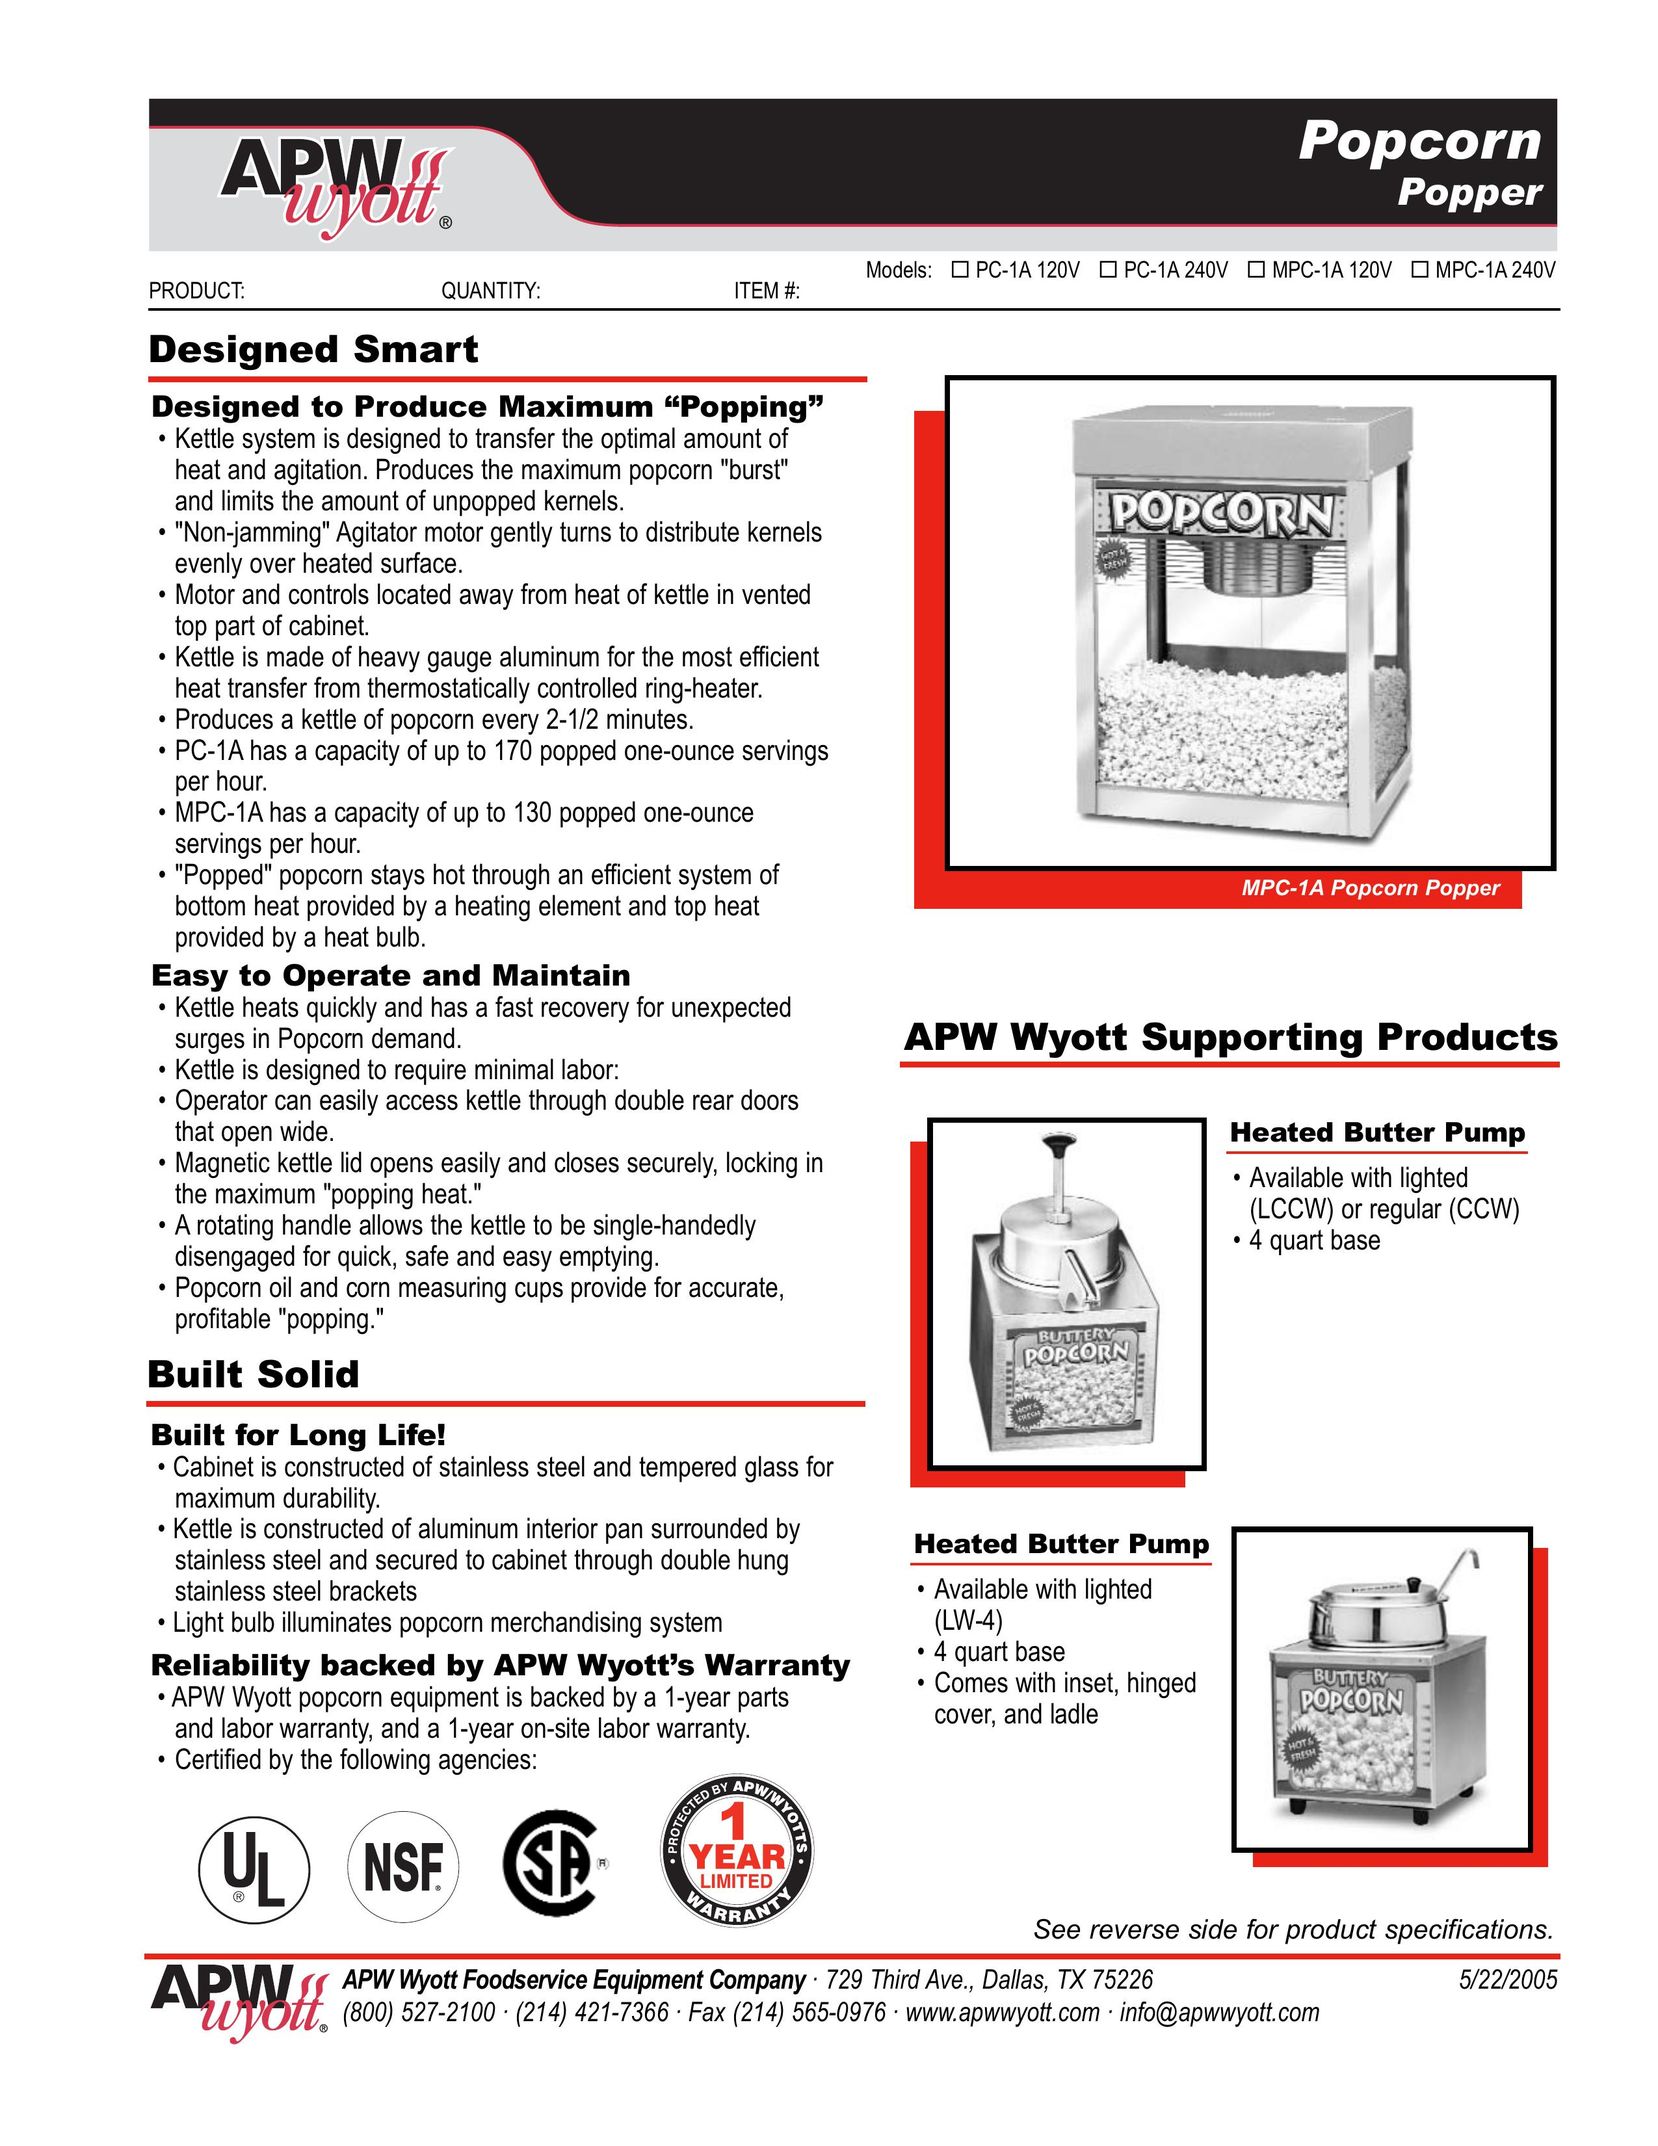 APW Wyott PC-1A 120V Popcorn Poppers User Manual